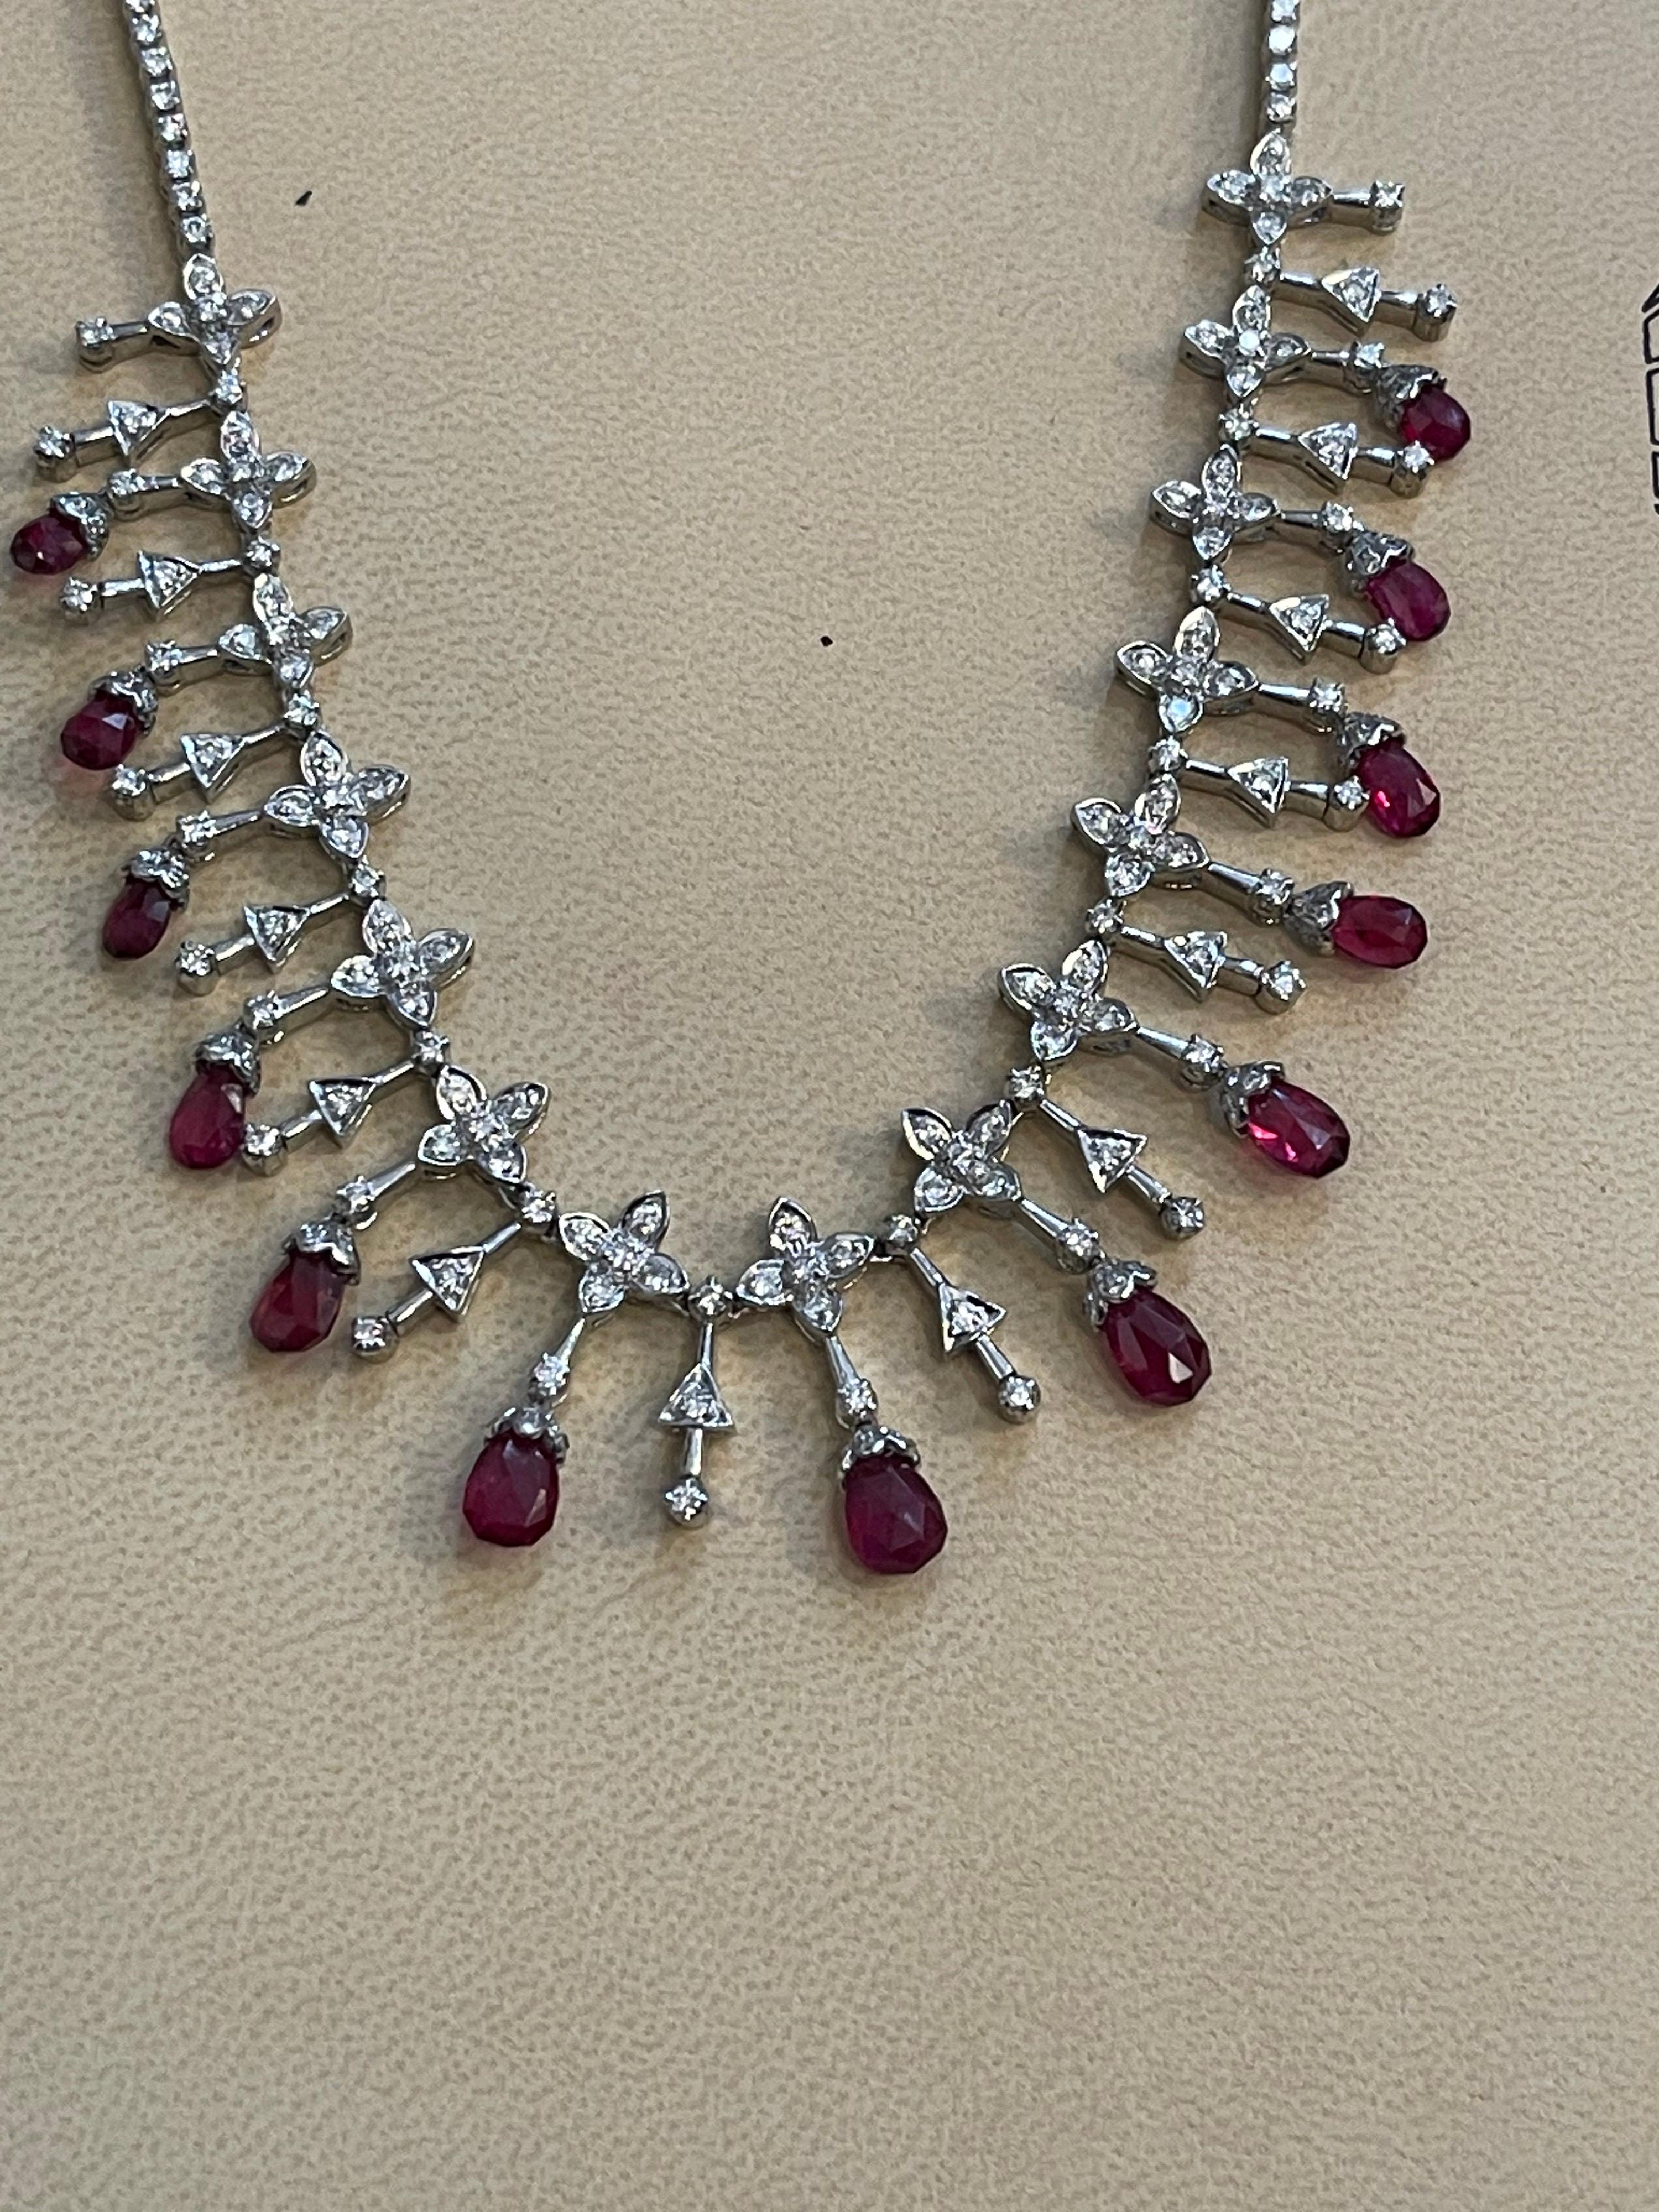 18 Ct Natural Ruby Briolette & 8 Ct Diamond Necklace 18 Karat White Gold, Estate For Sale 1